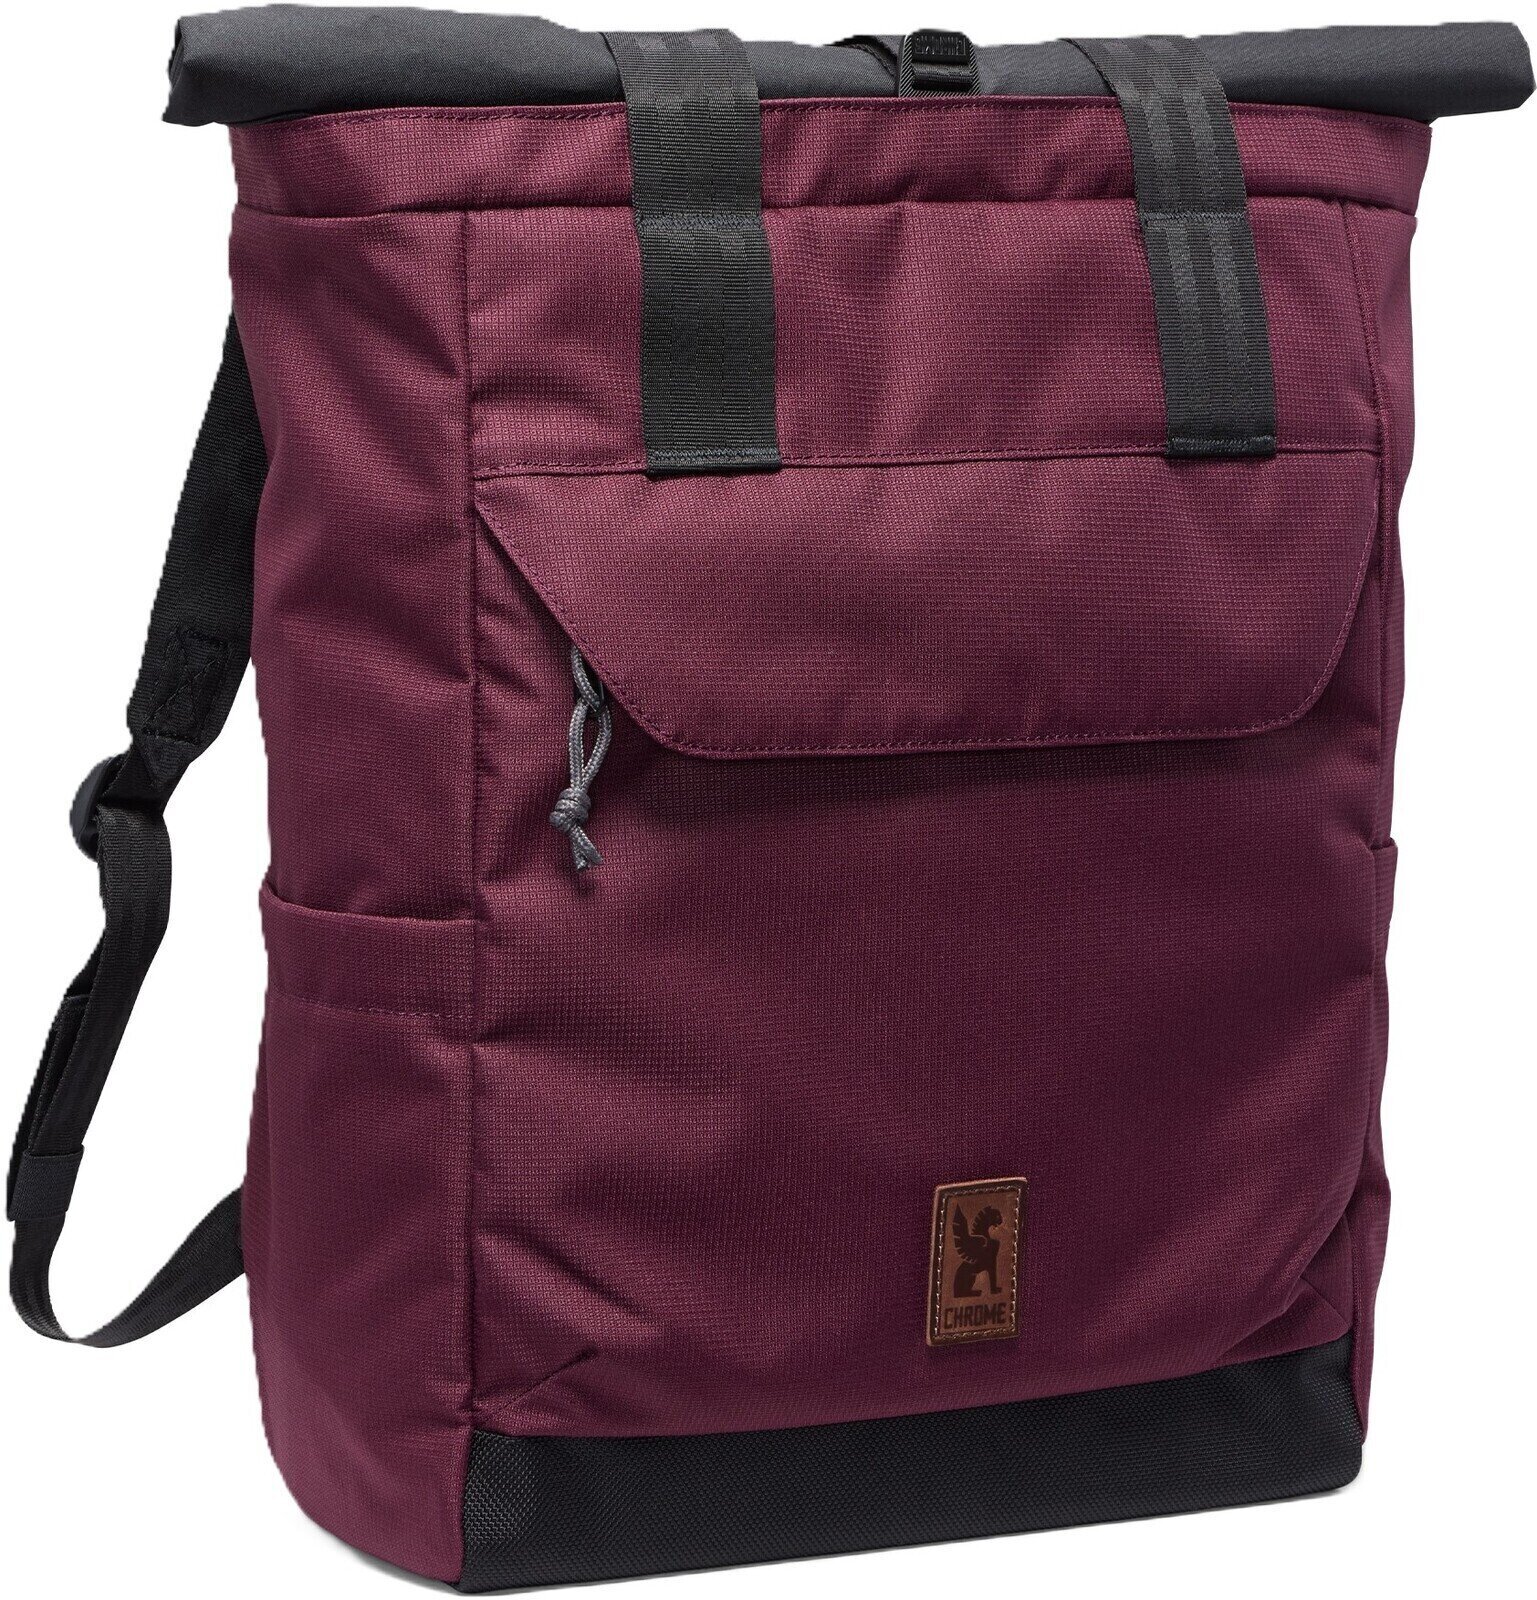 Lifestyle Backpack / Bag Chrome Ruckas Tote Royale 27 L Backpack